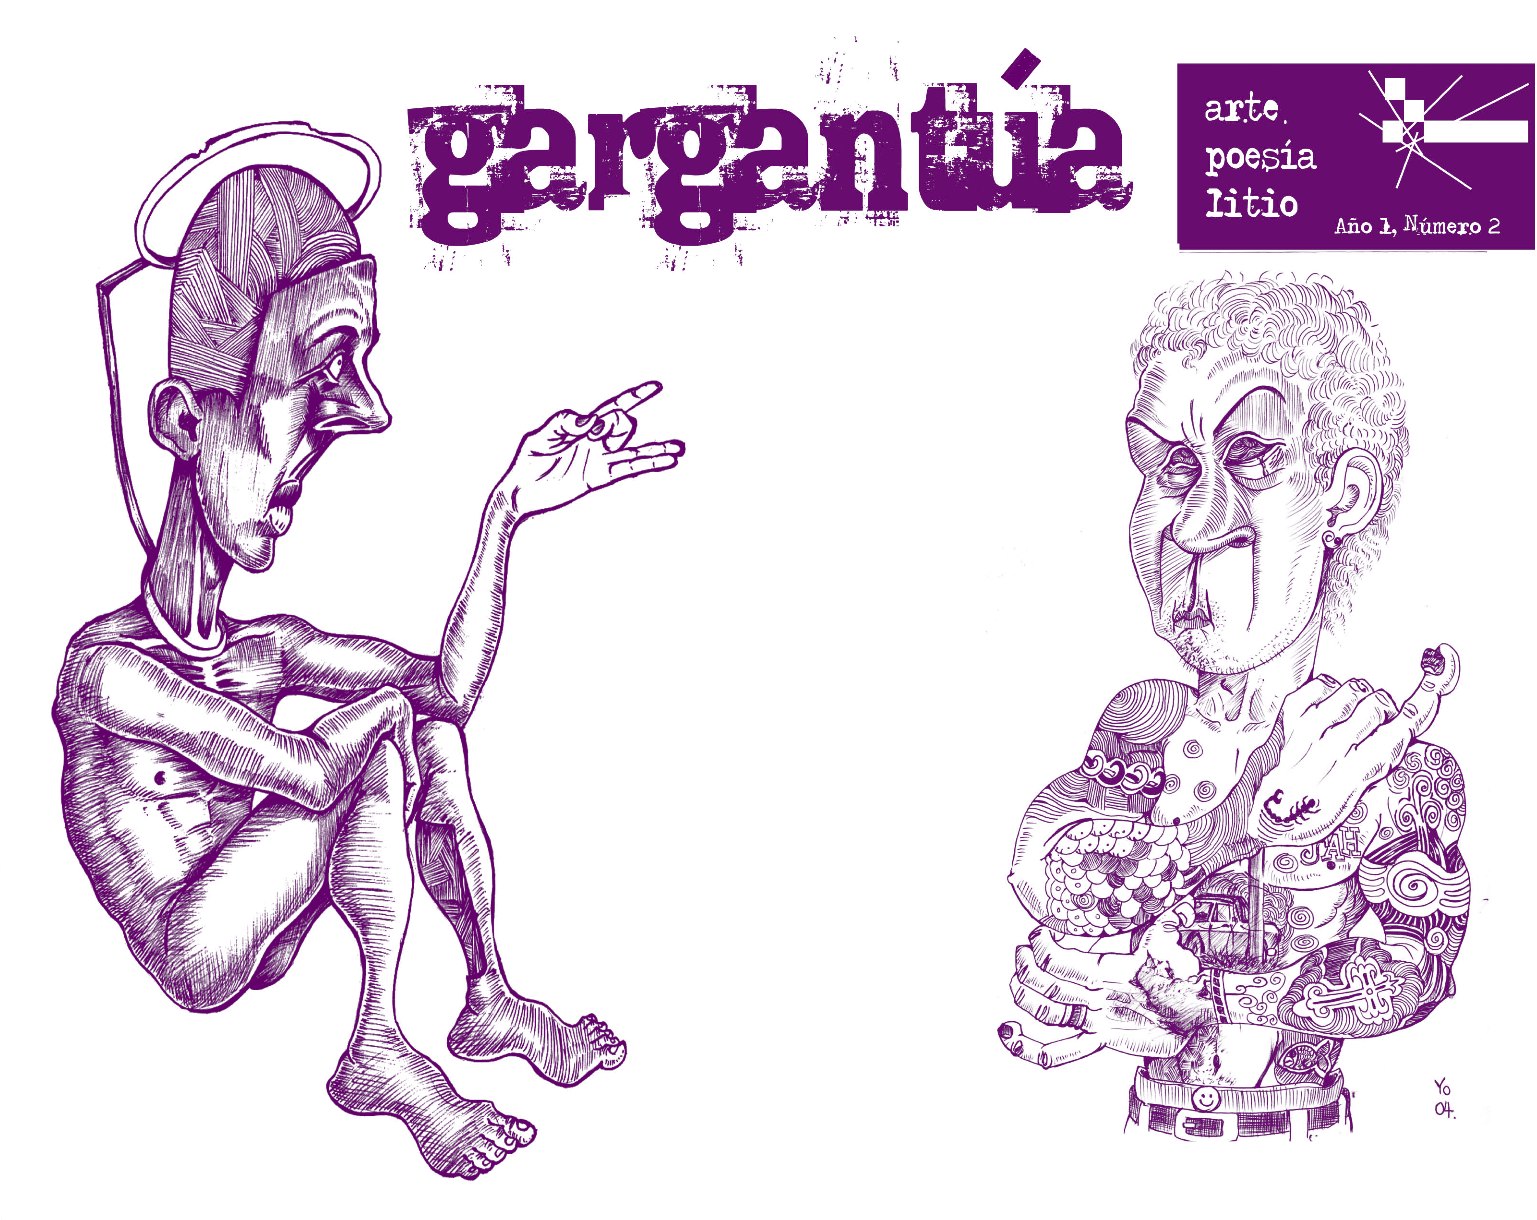 Gargantua 2 edition, with art from Yo David Soto. 